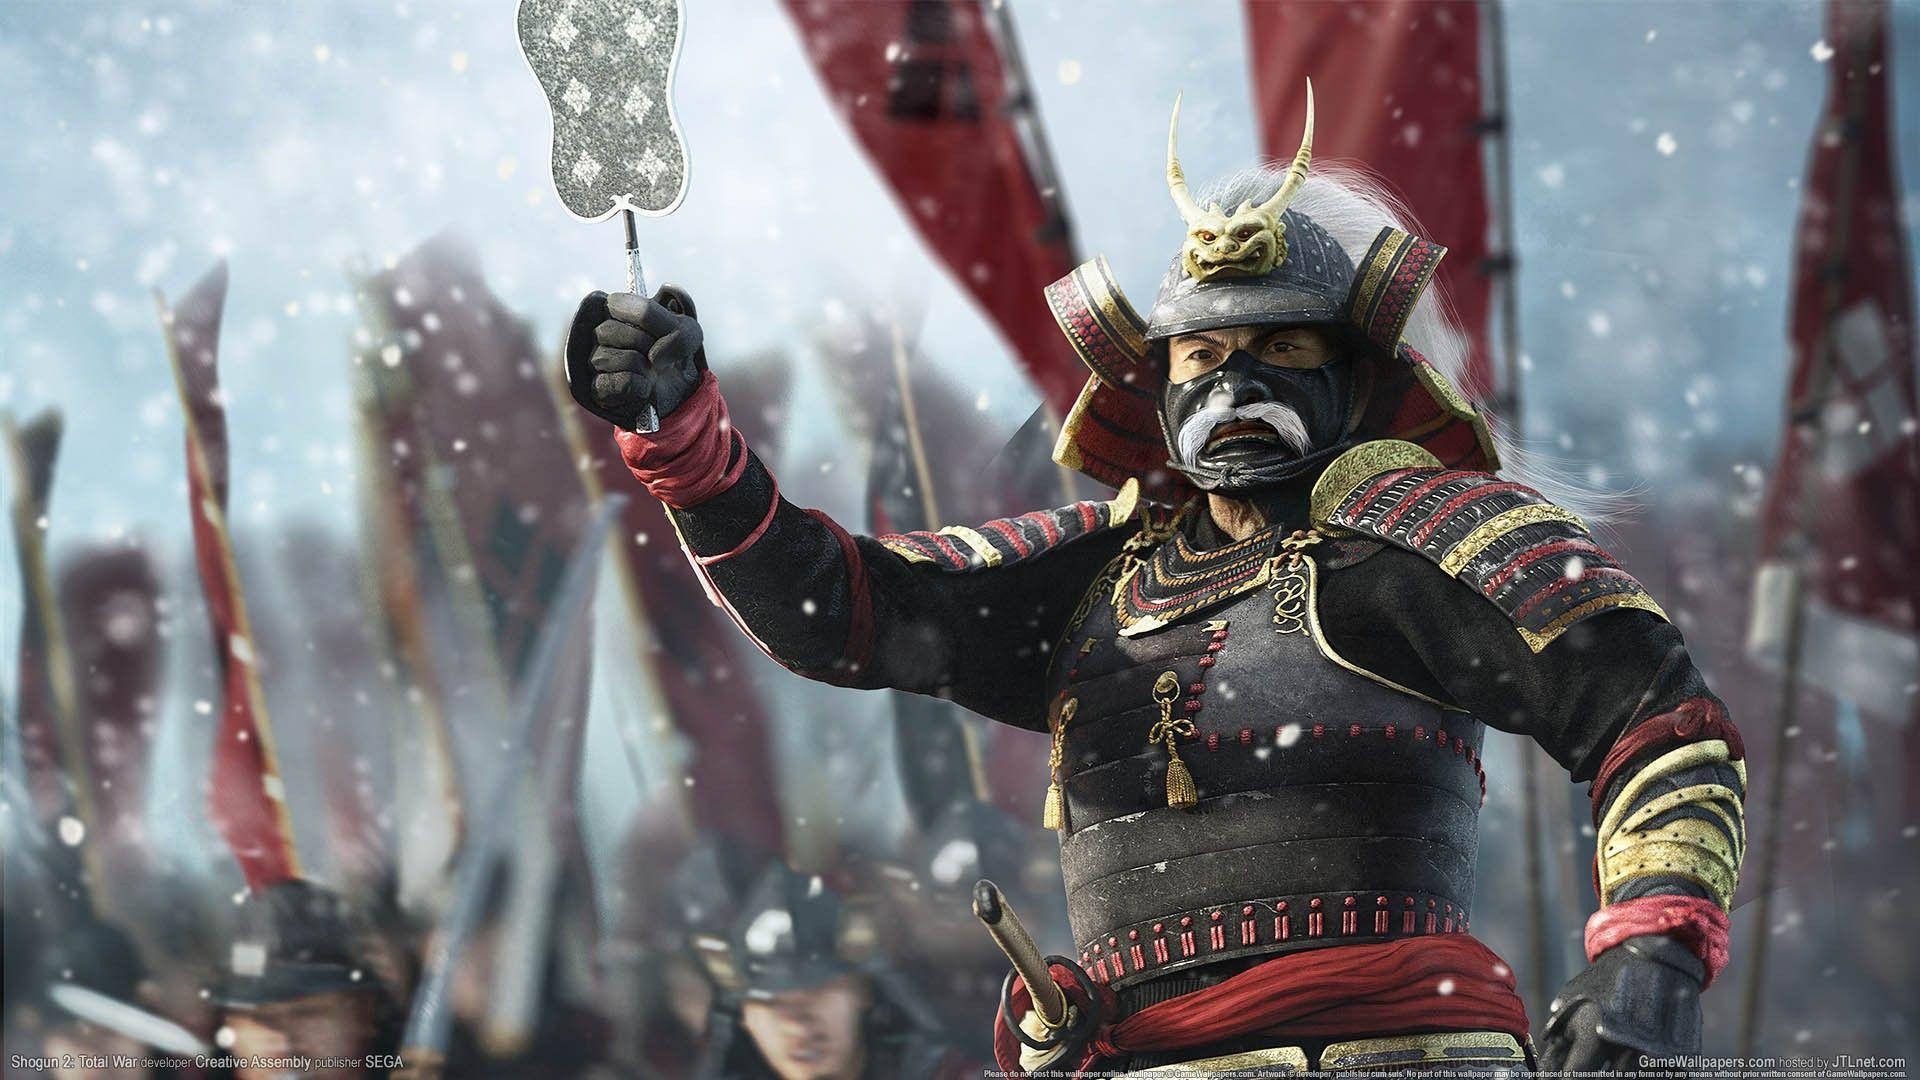 Shogun Samurai Wallpapers Top Free Shogun Samurai Backgrounds